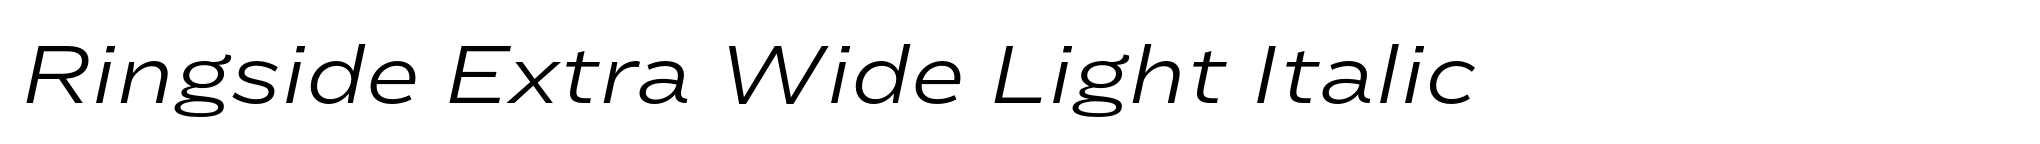 Ringside Extra Wide Light Italic image